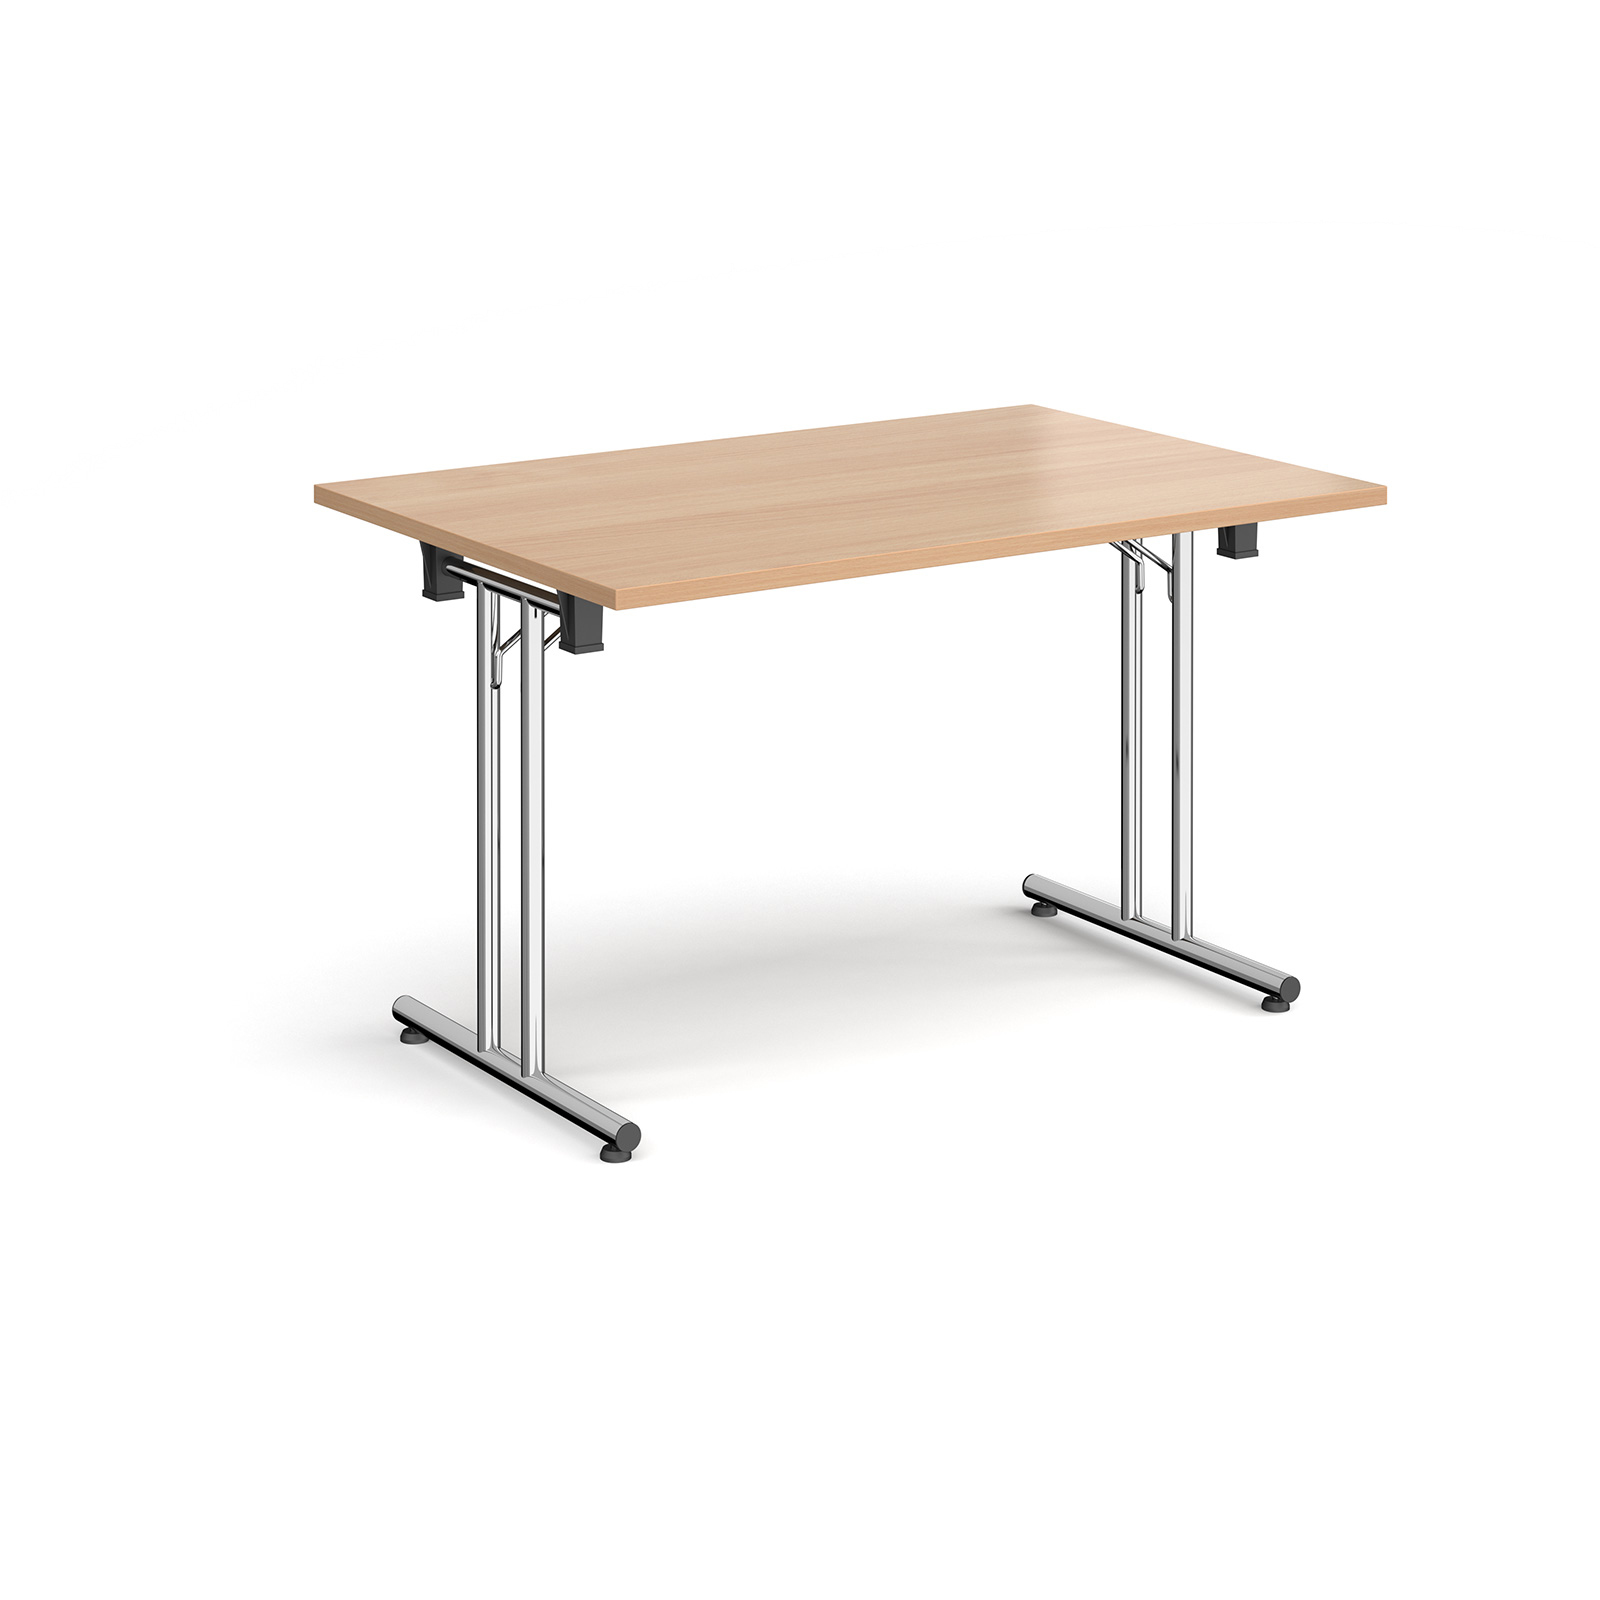 Rectangular folding leg table with chrome legs and straight foot rails 1200mm x 800mm - beech